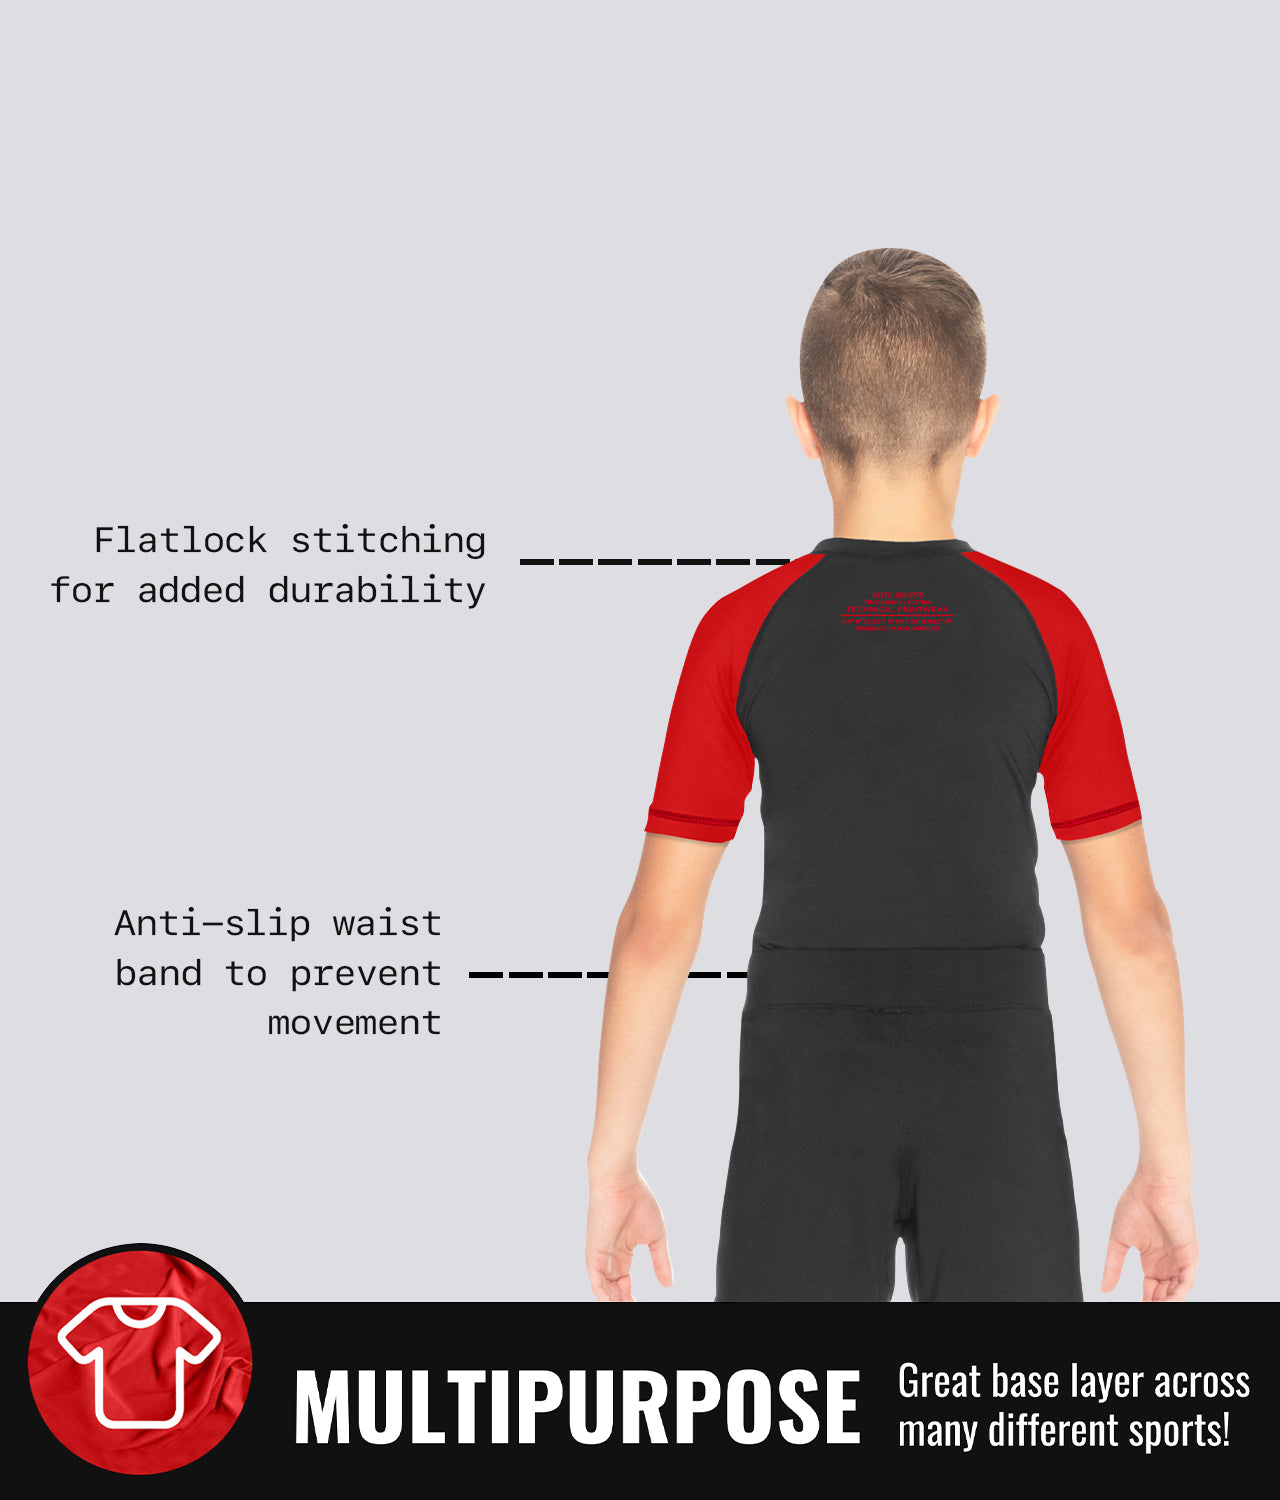 Elite Sports Kids' Standard Red Short Sleeve Boxing Rash Guard